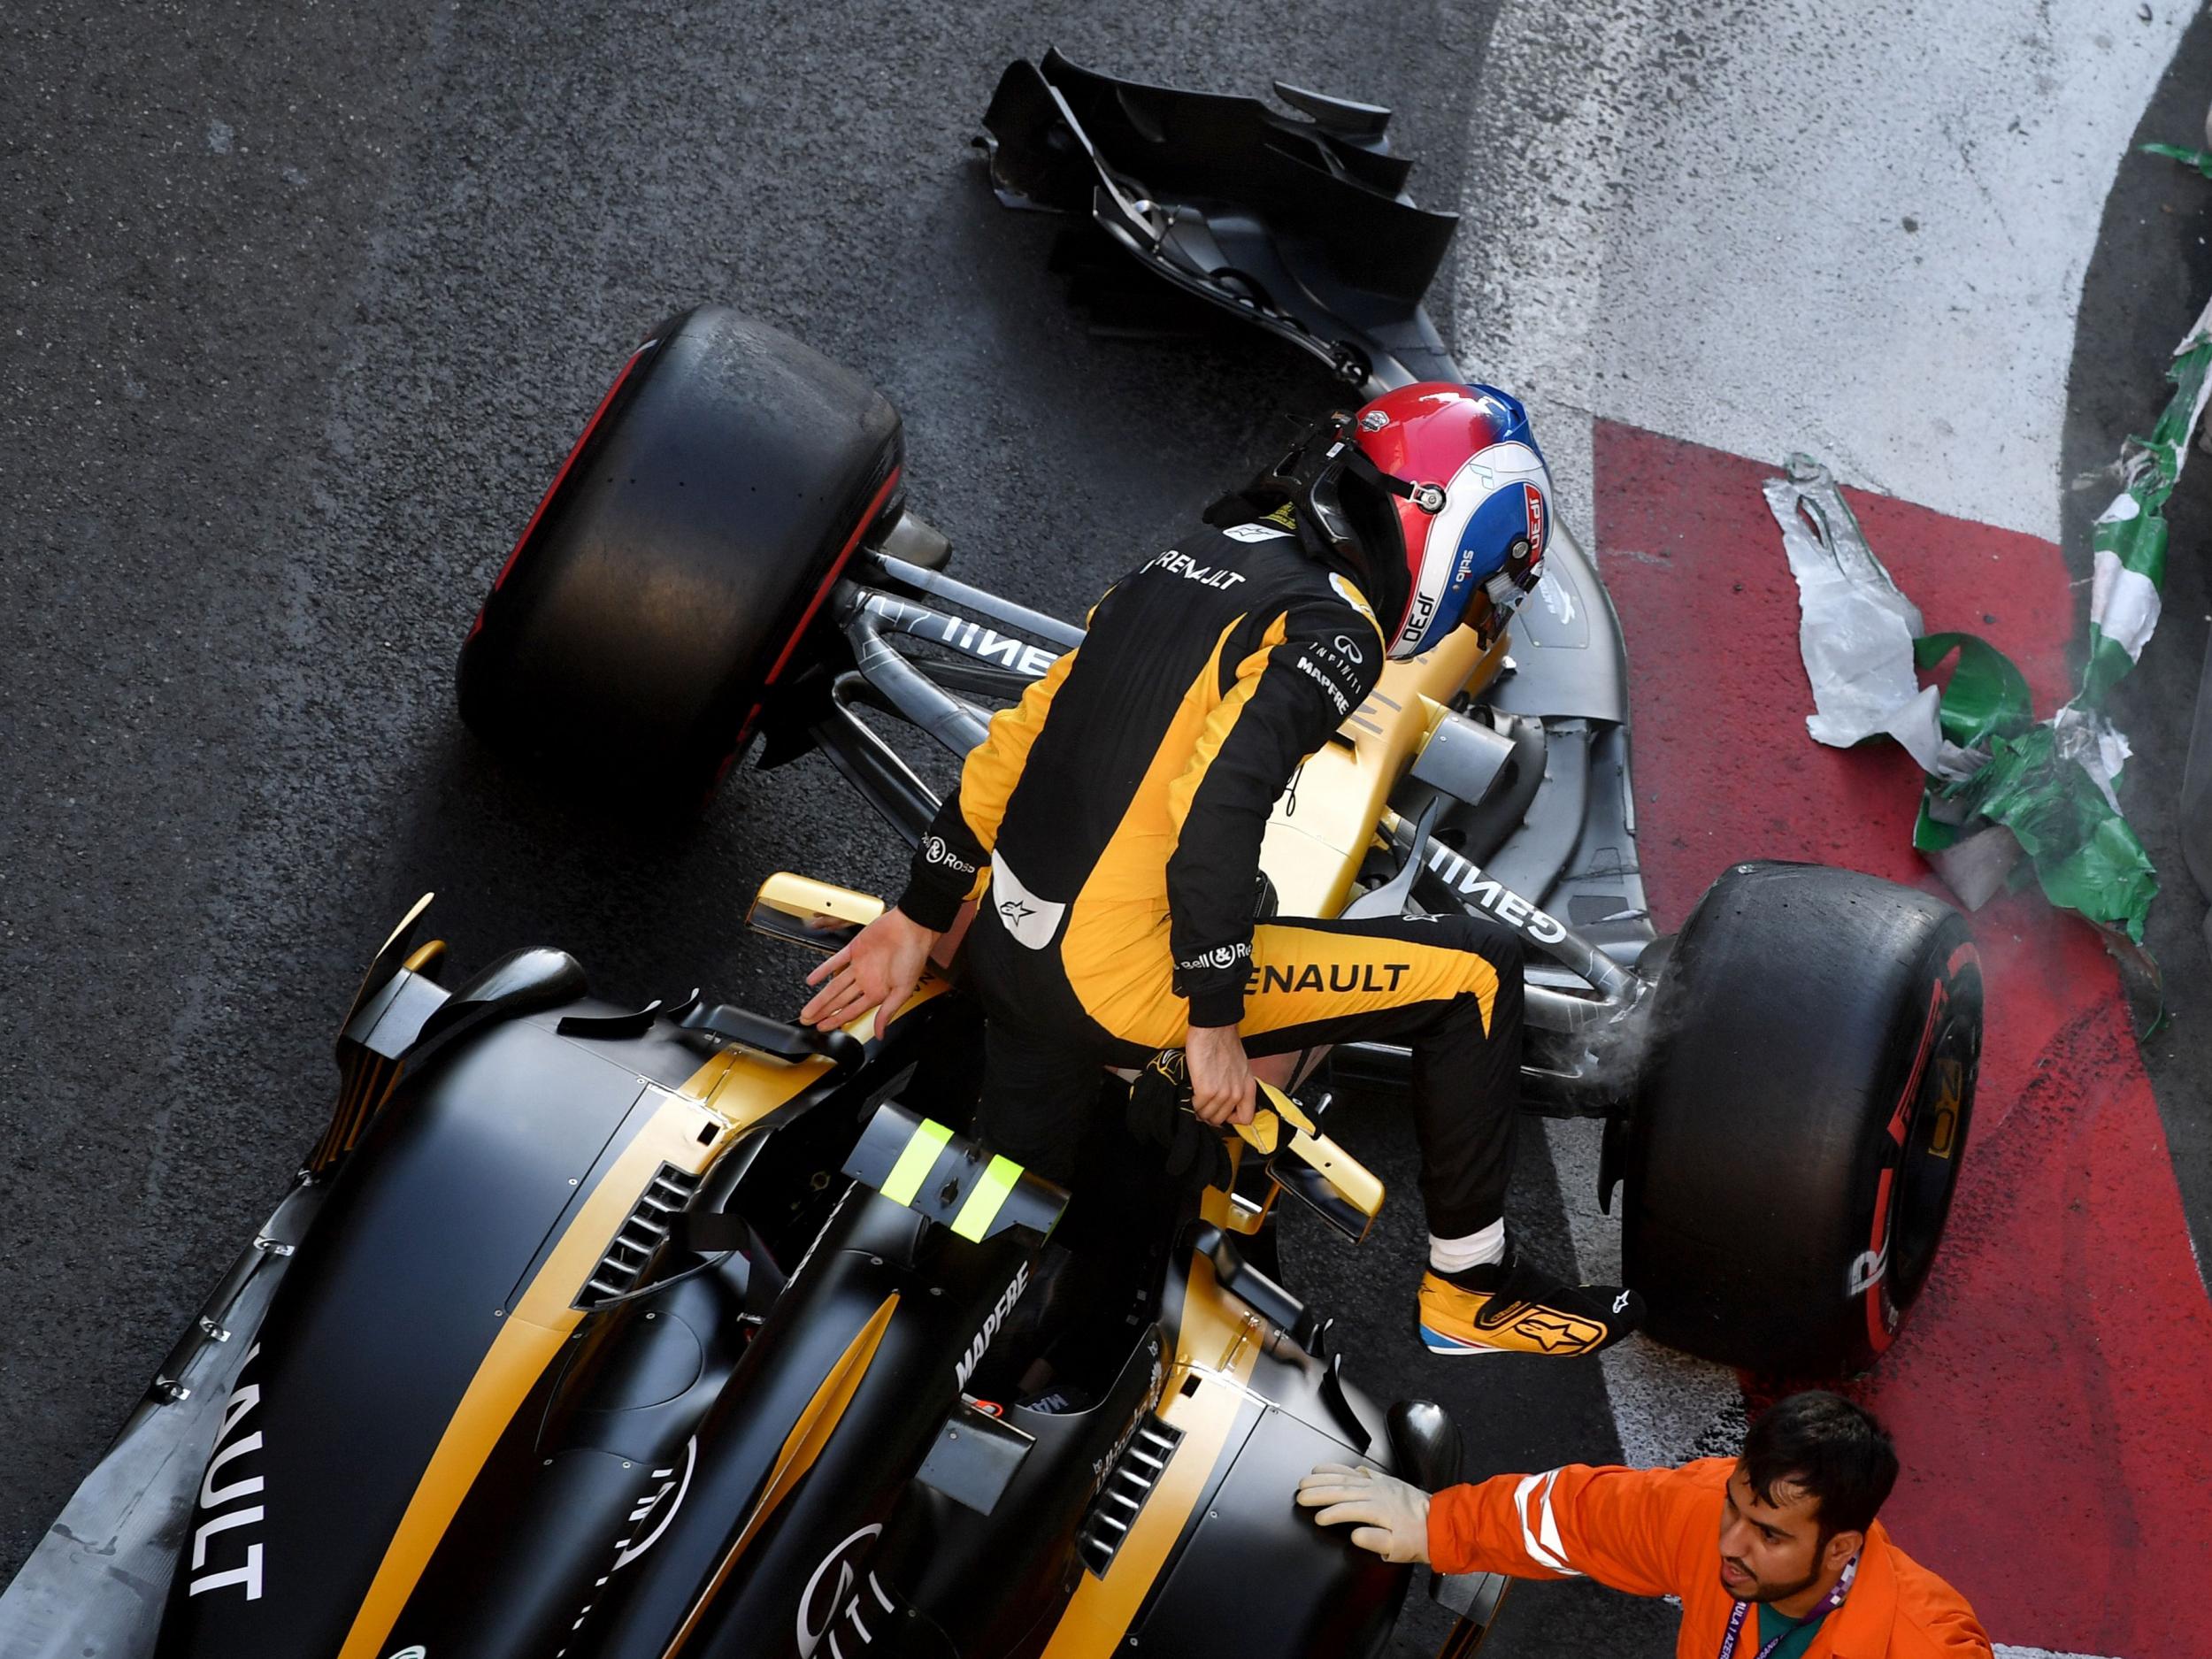 Both Jolyon Palmer and Sergio Perez suffered crashes in Baku